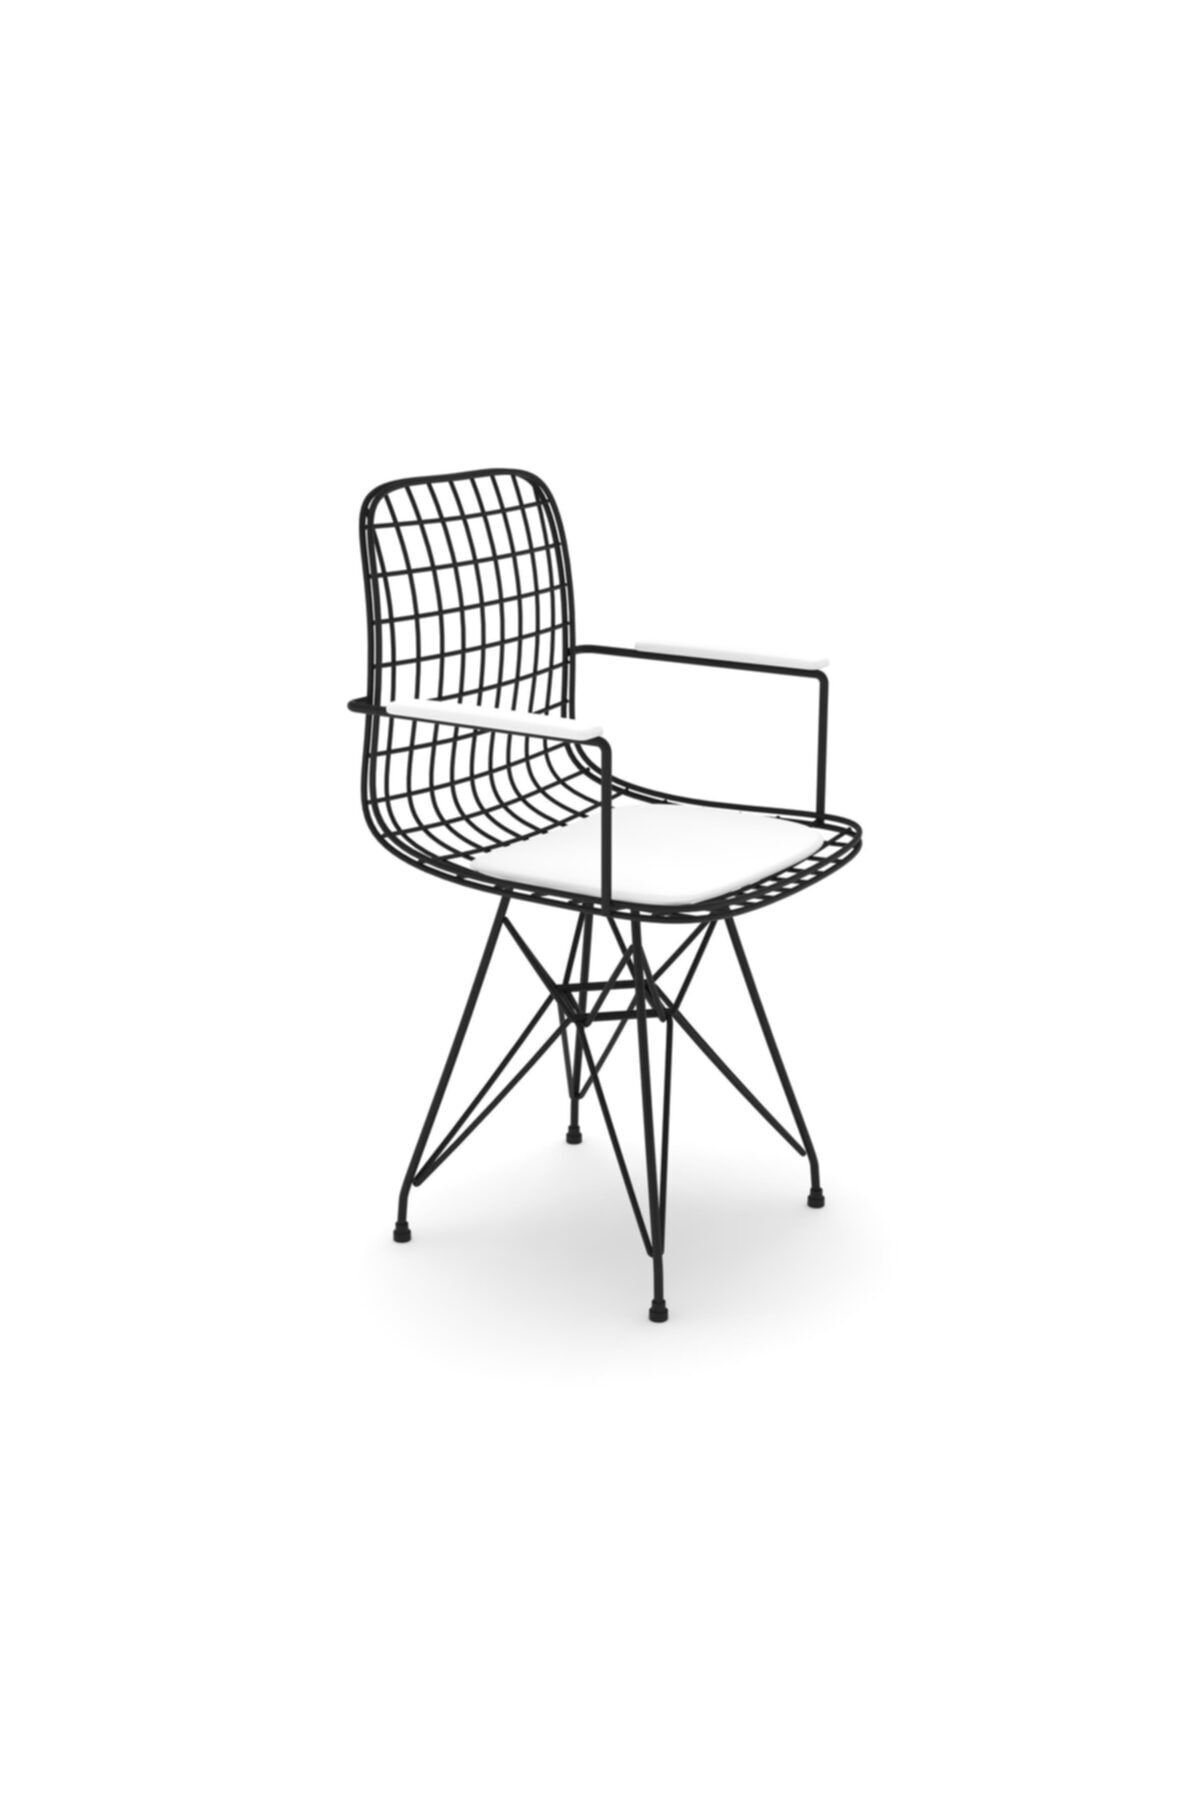 Kenzlife Knsz kafes tel sandalyesi 1 li mazlum syhbyz kolçaklı ofis cafe bahçe mutfak